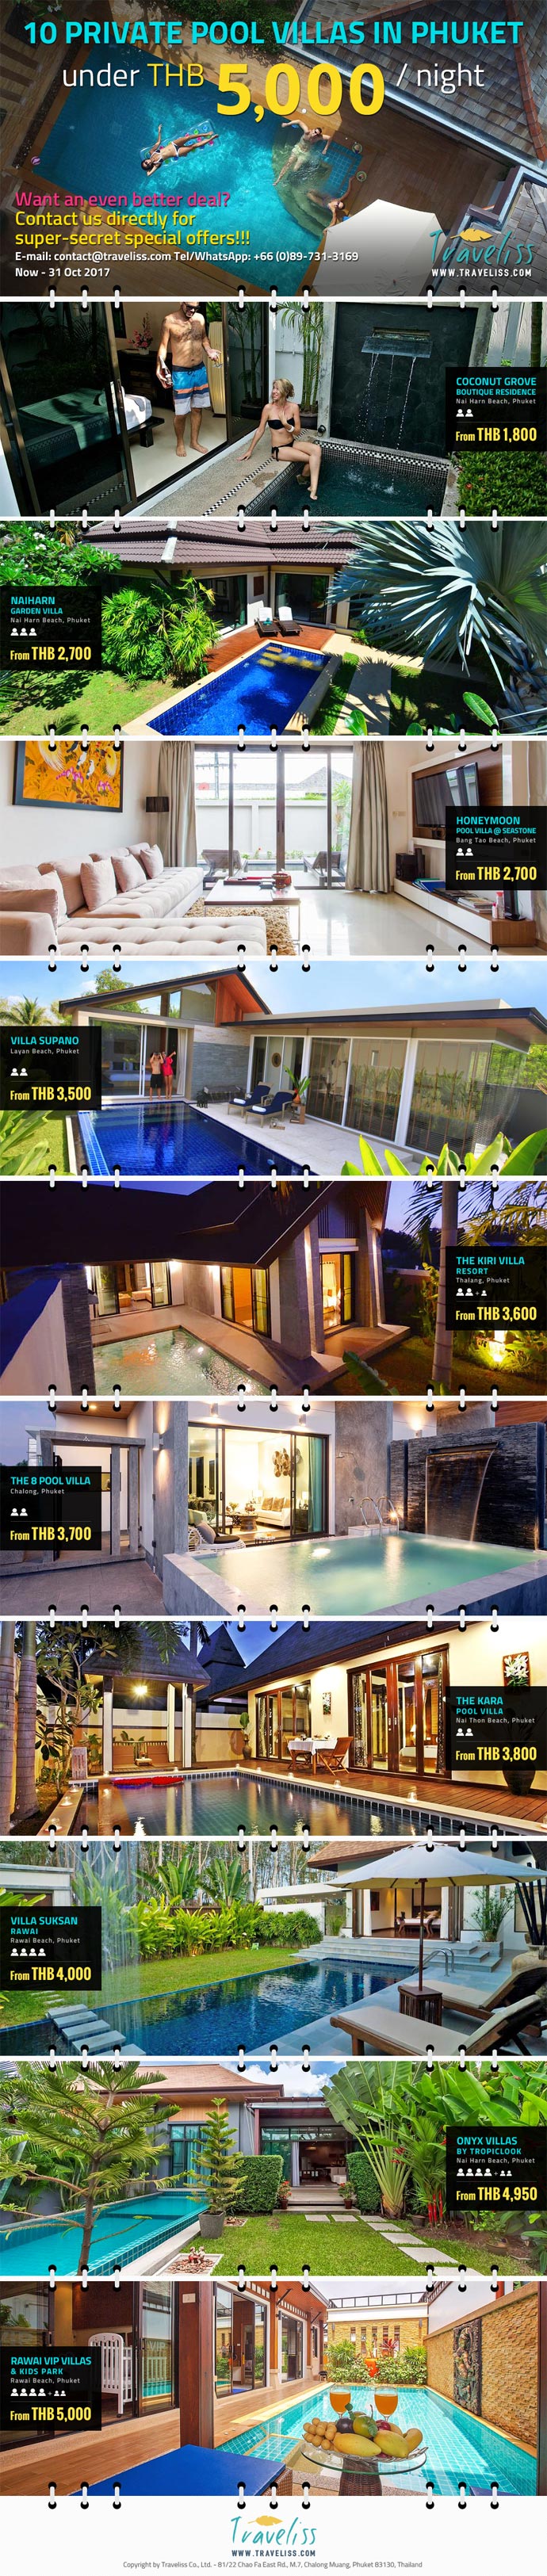 10 Private Pool Villas in Phuket under THB 5,000 Baht